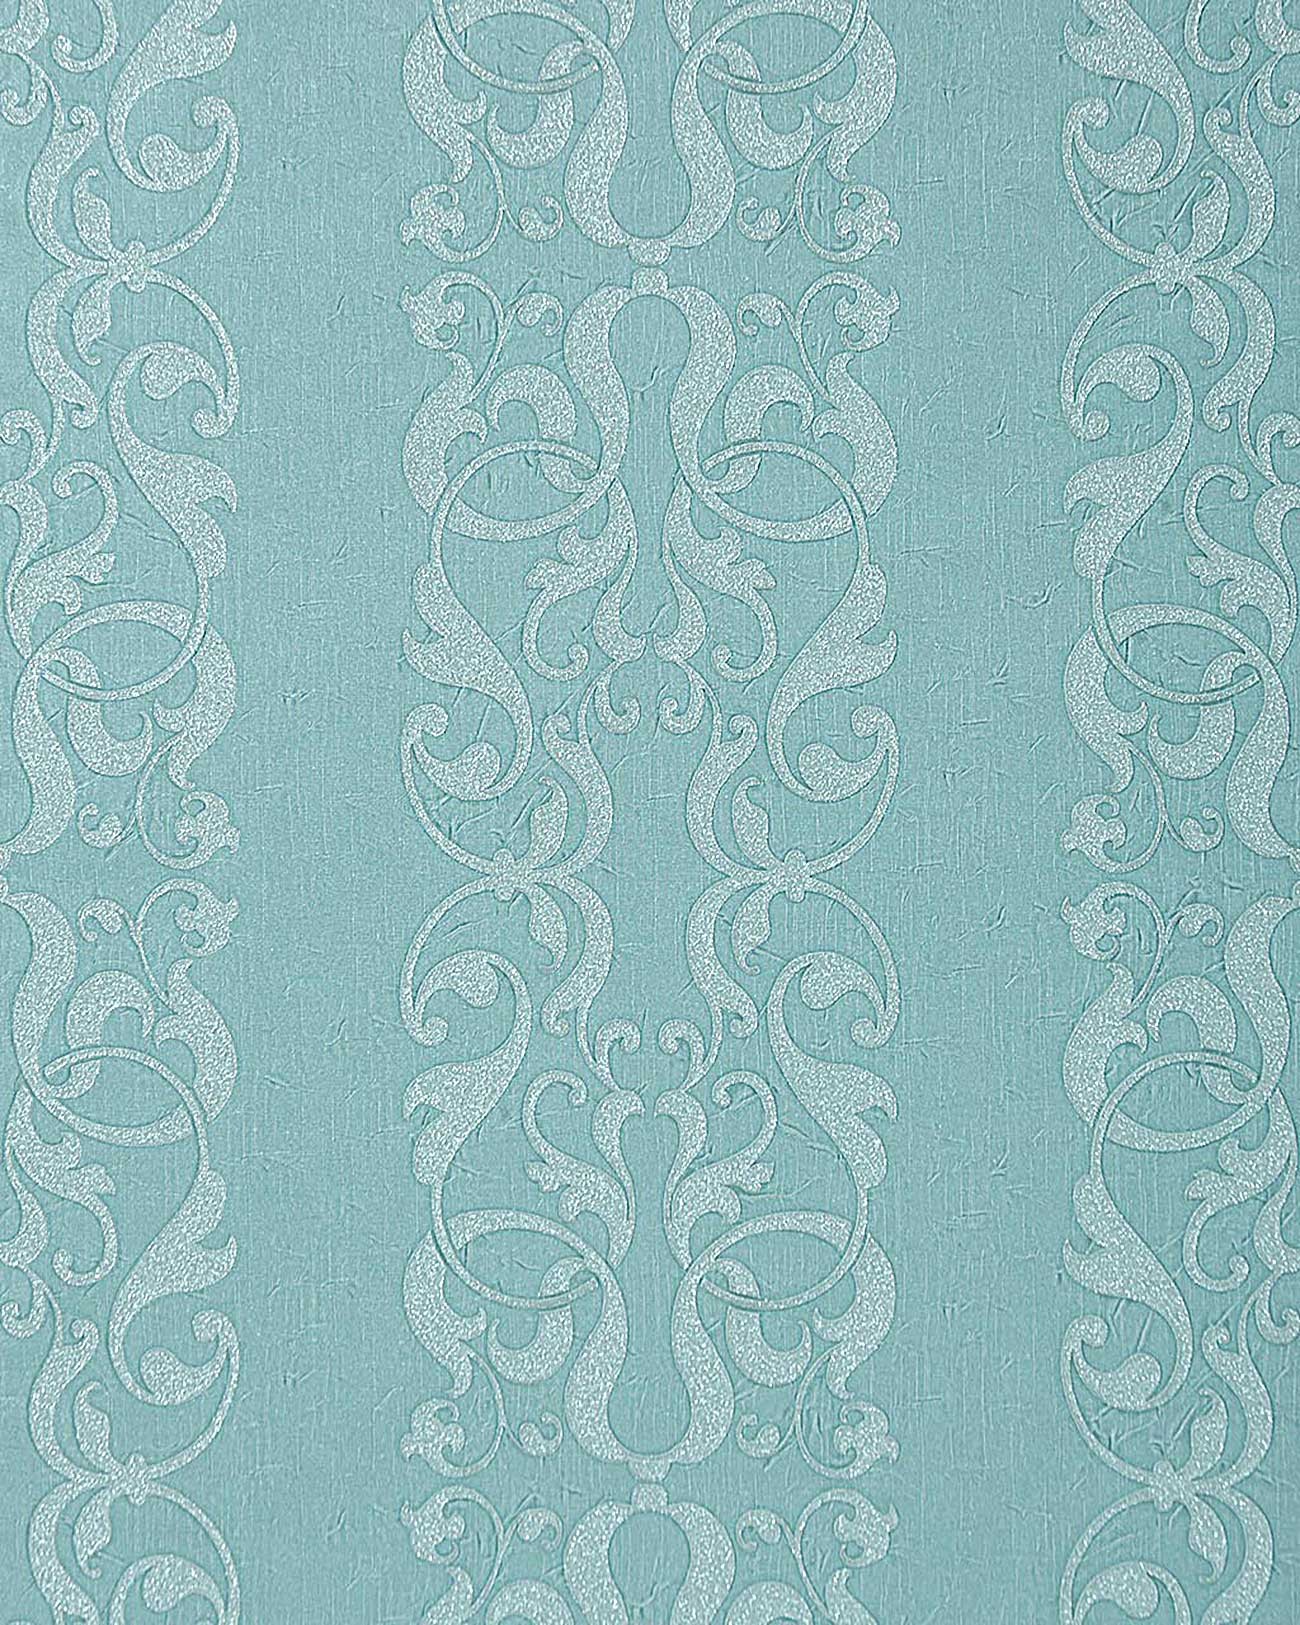 Baroque Wallpaper Decorative Stripes Damask Pattern Turquoise